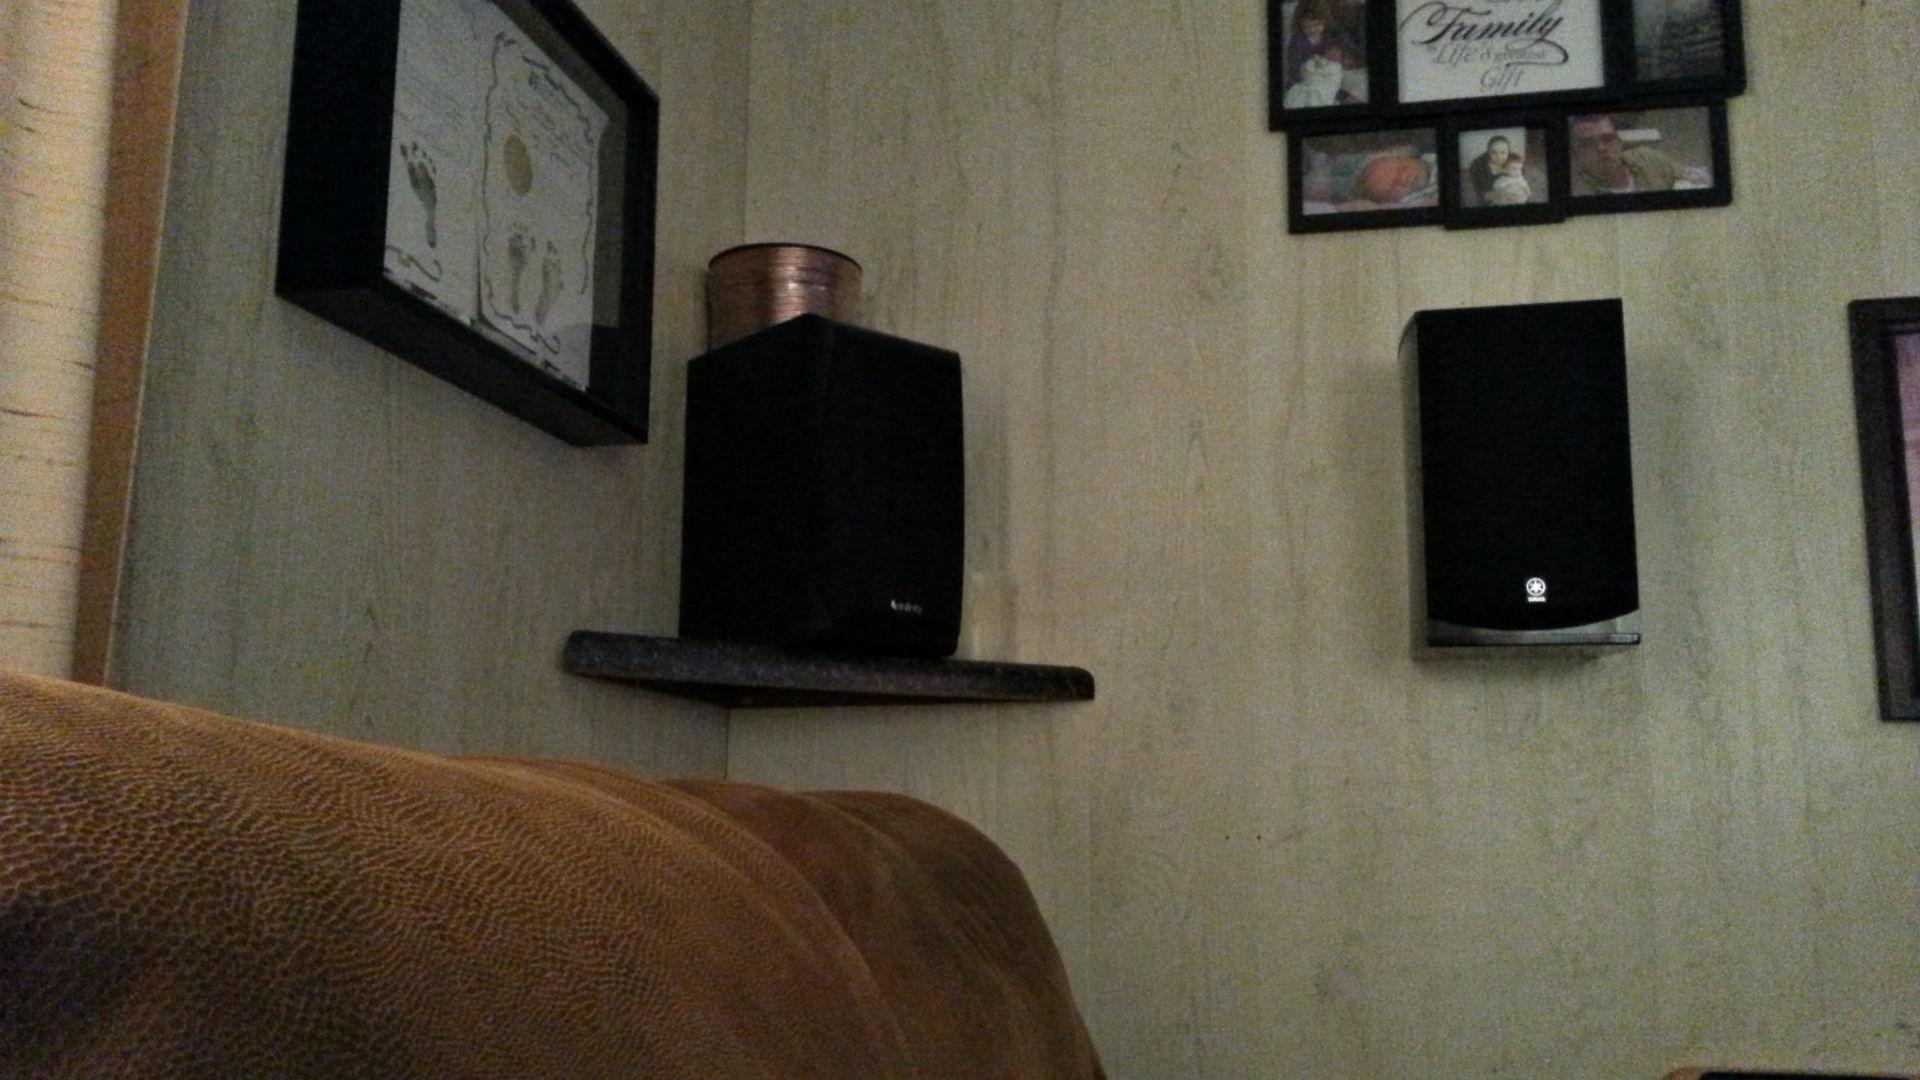 my surround speakers